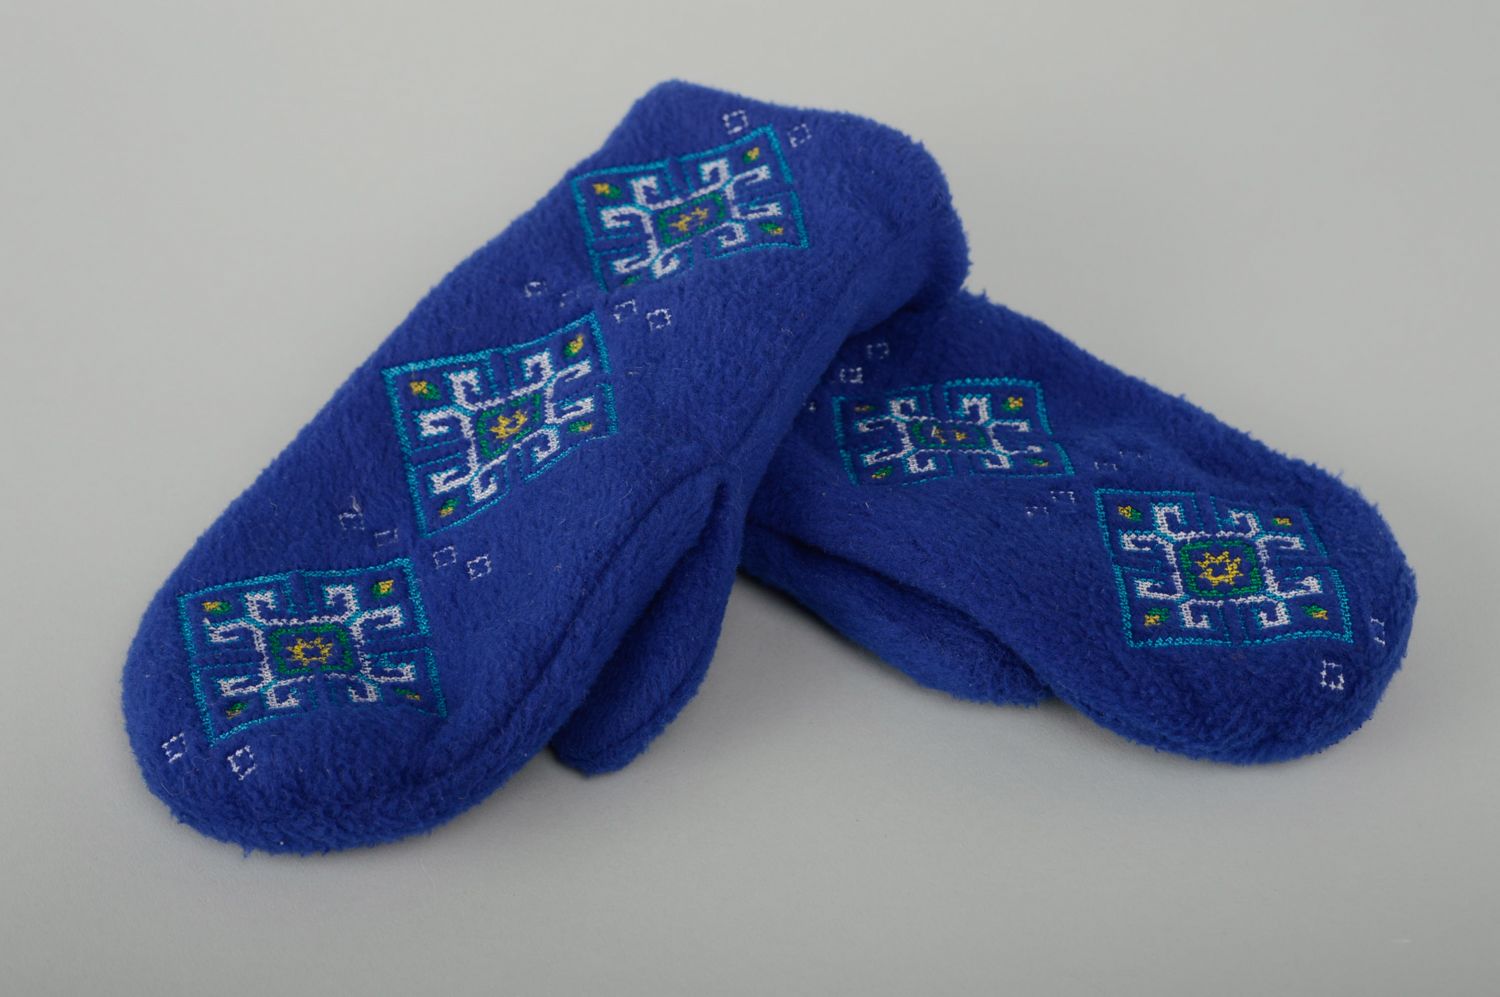 Теплые варежки с вышивкой синие из флиса фото 1